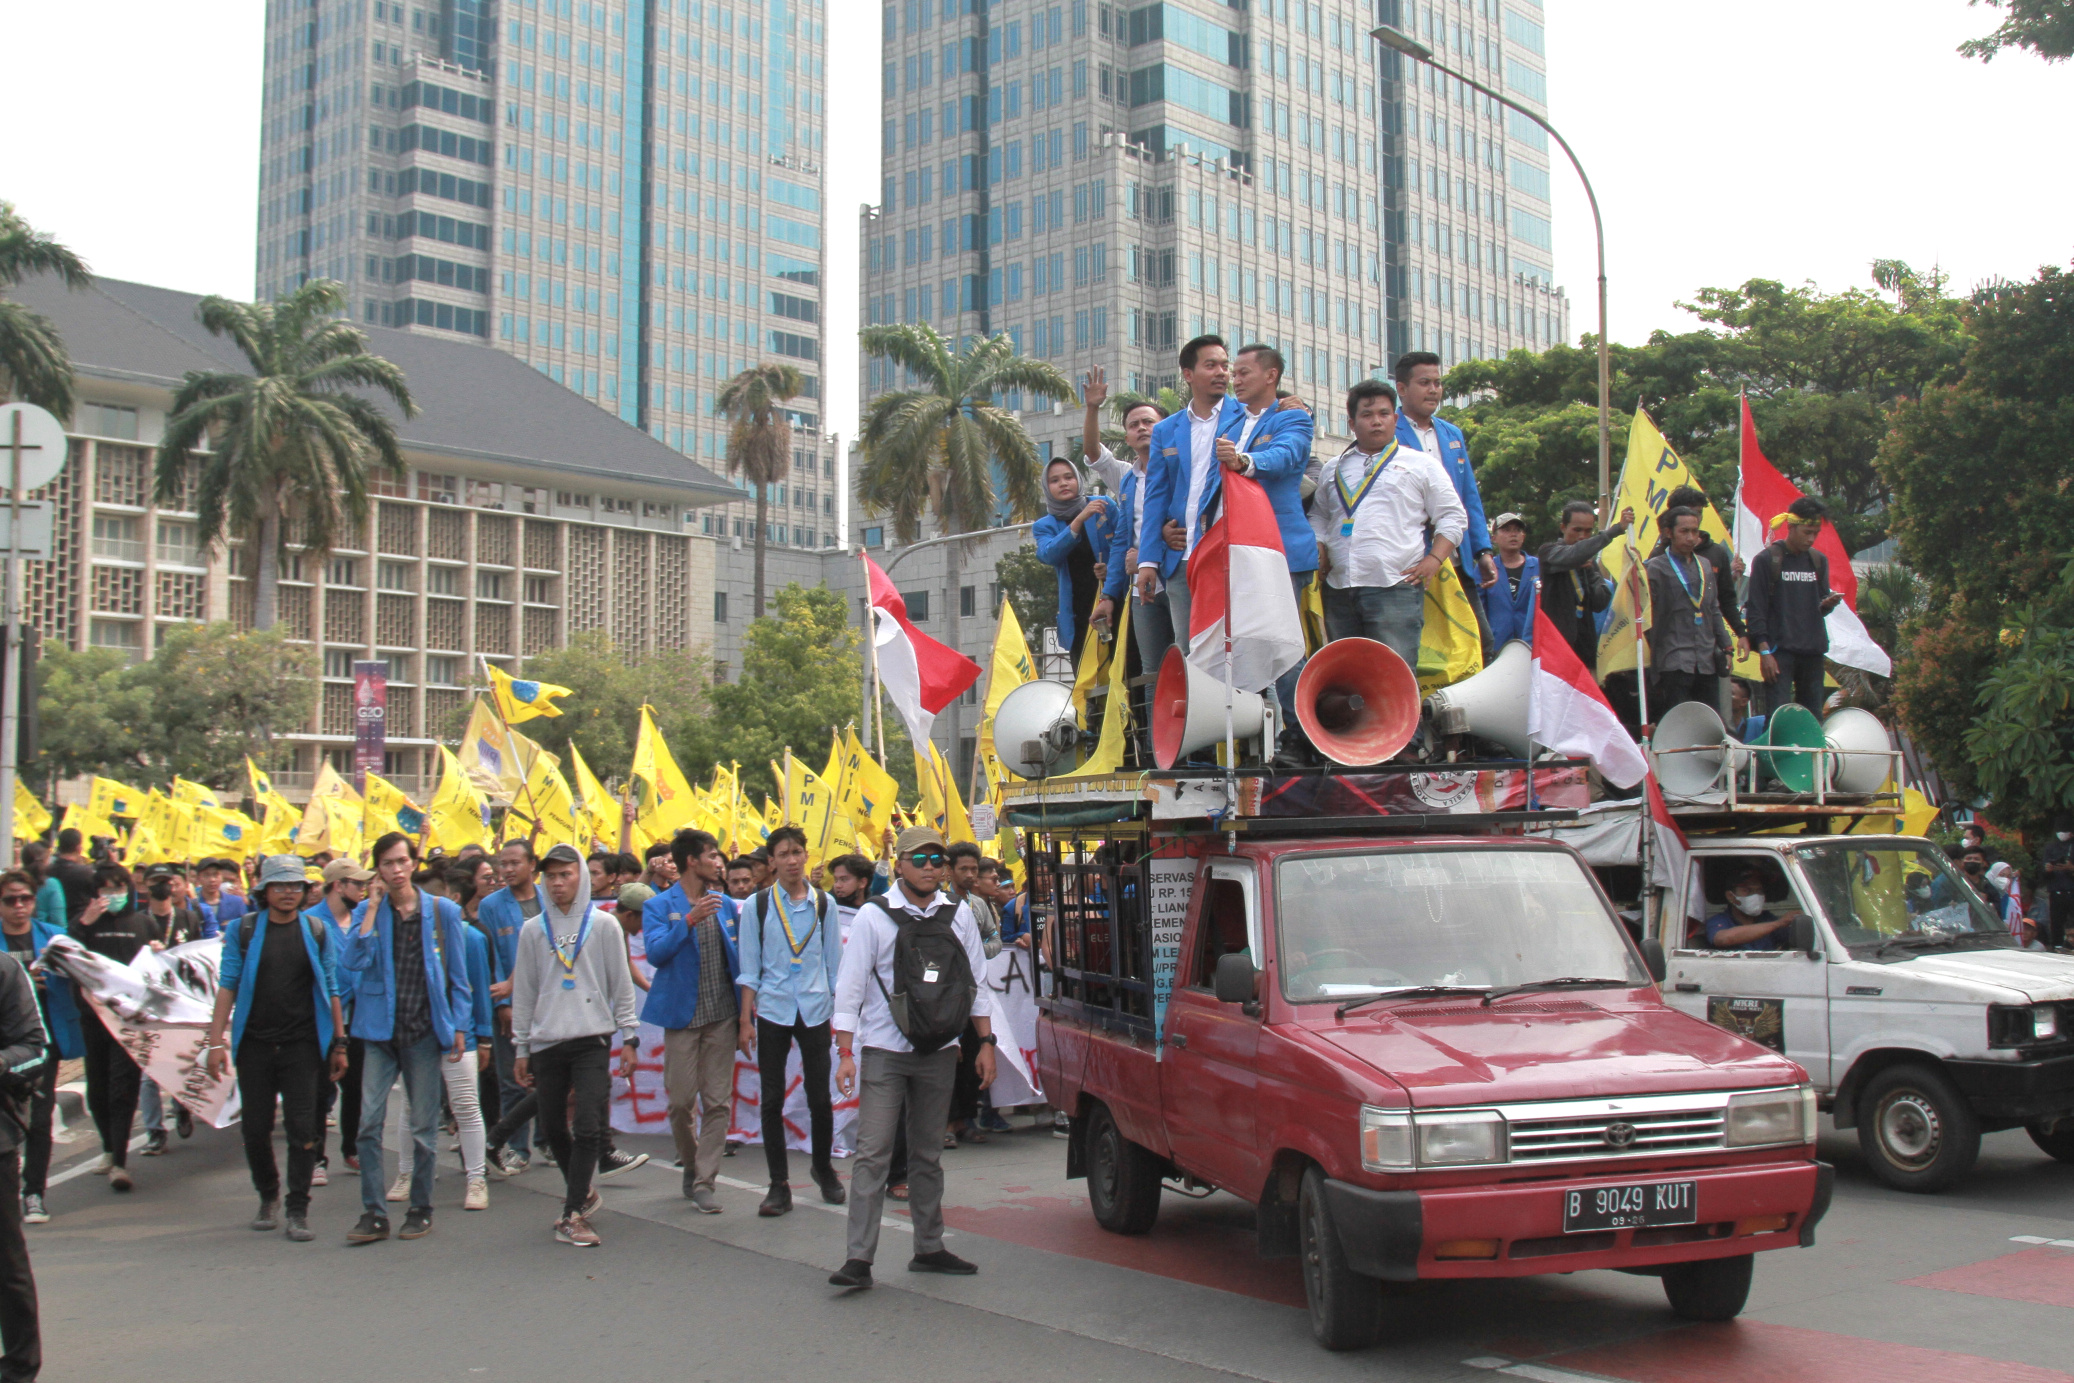 Ratusan mahasiswa gelar aksi demo tolak kenaikan BBM di Patung Kuda (Ashar/SinPo.id)